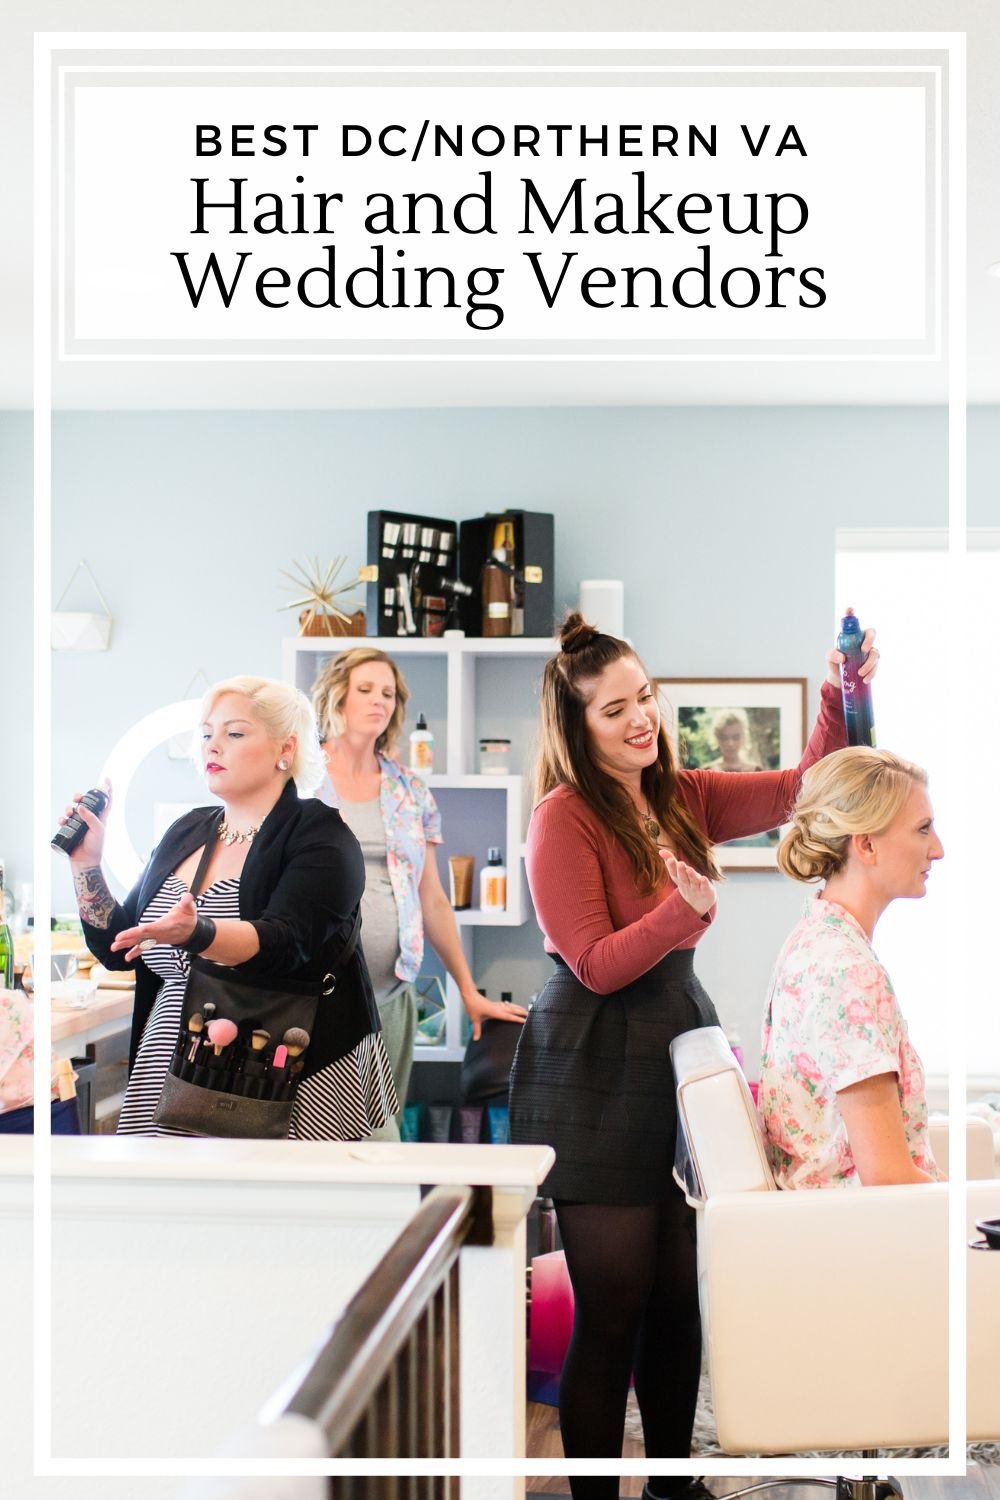 Best DC hair and makeup wedding vendors